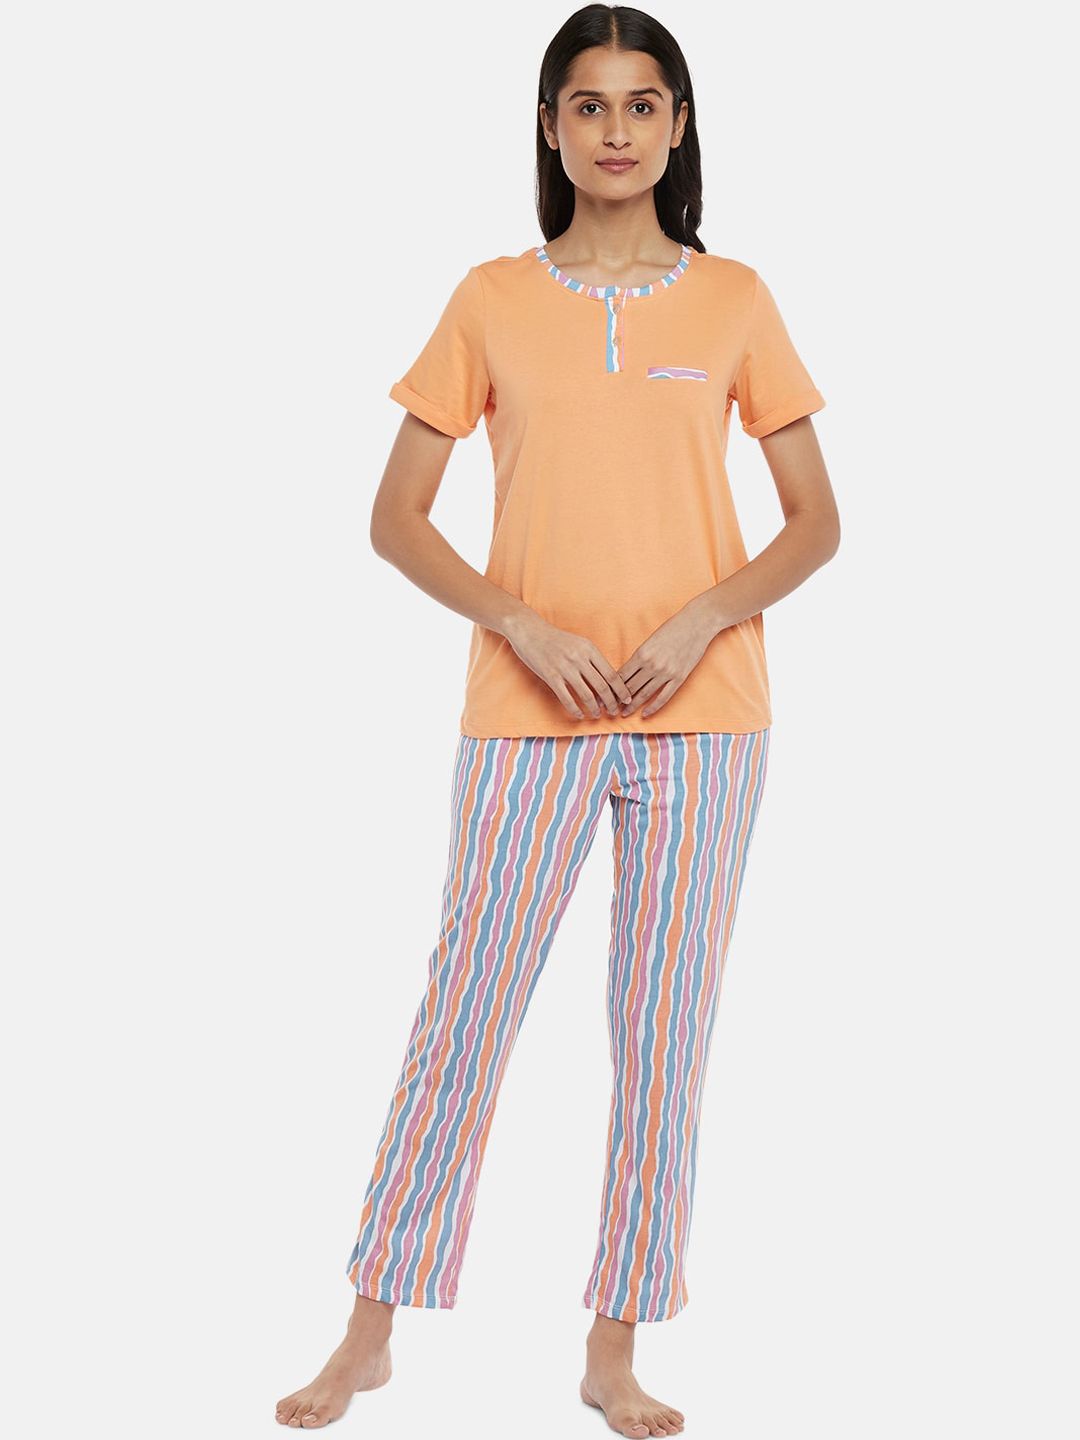 Dreamz by Pantaloons Women Orange & Blue Night suit Price in India